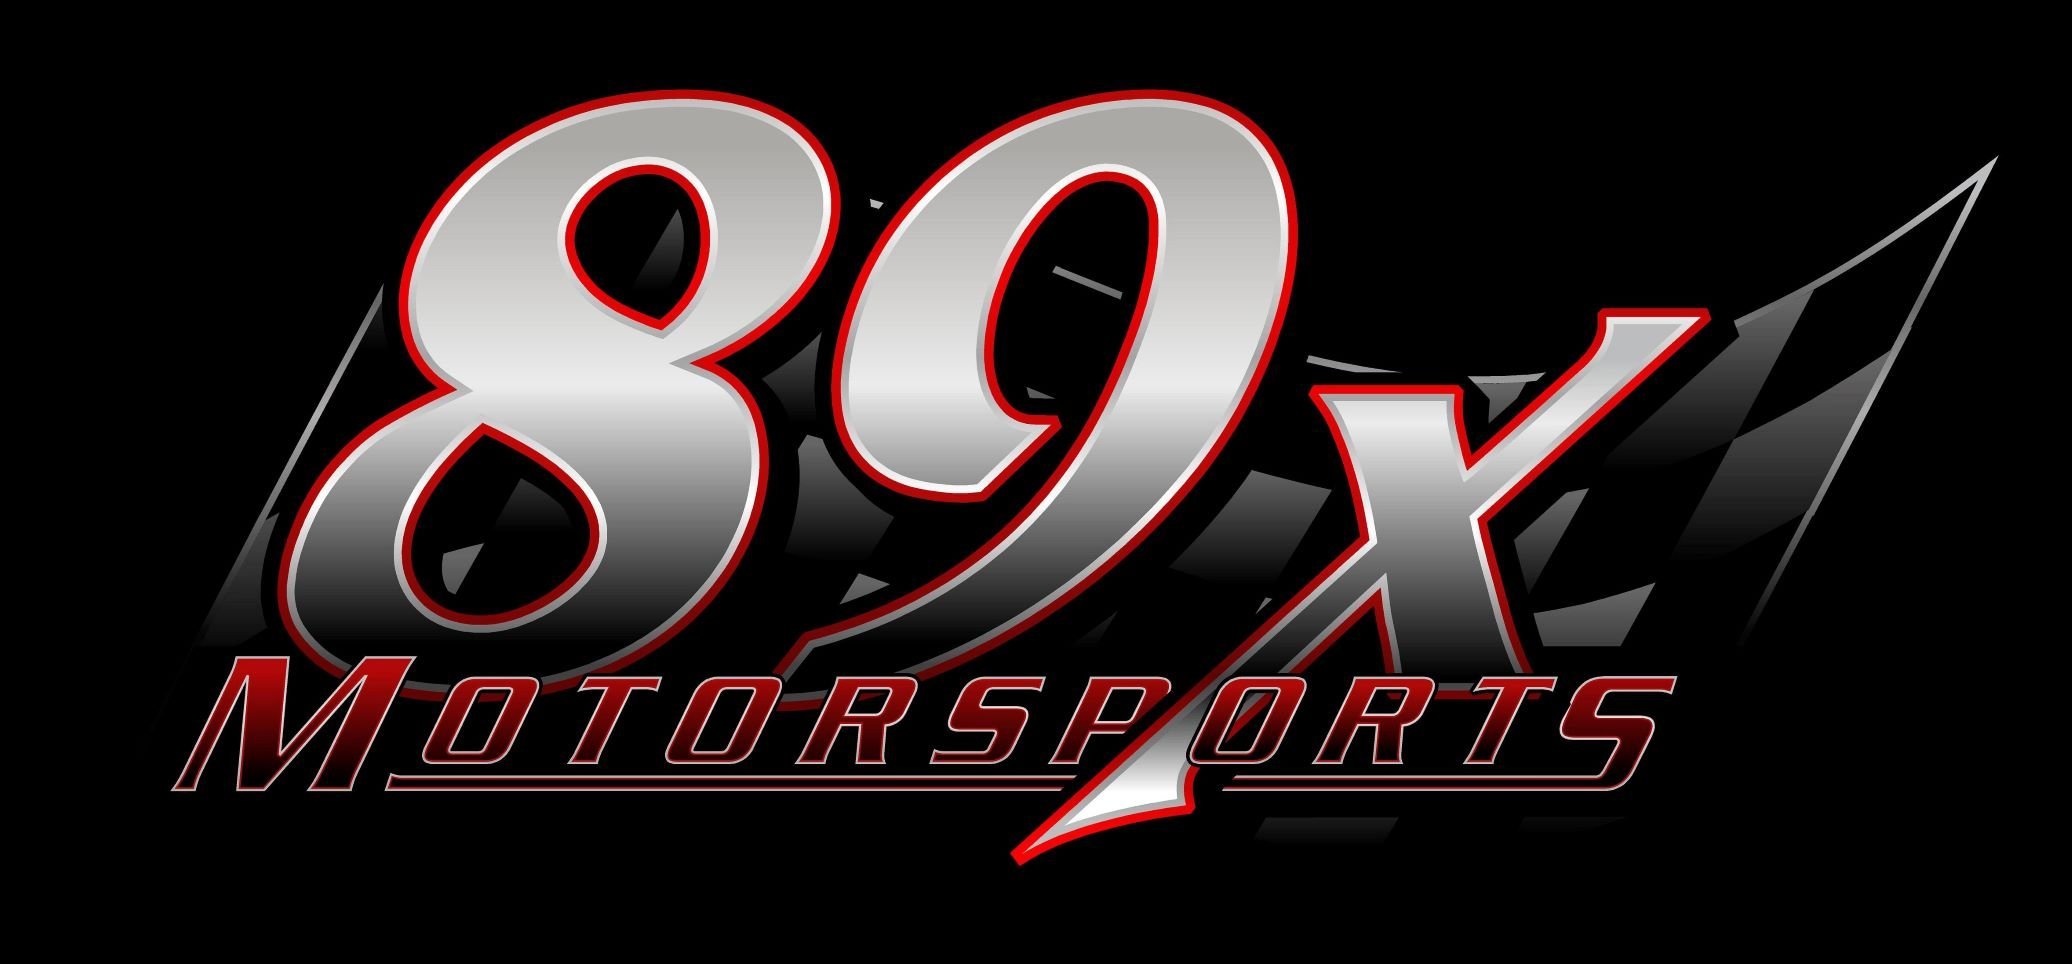 89x Motorsports